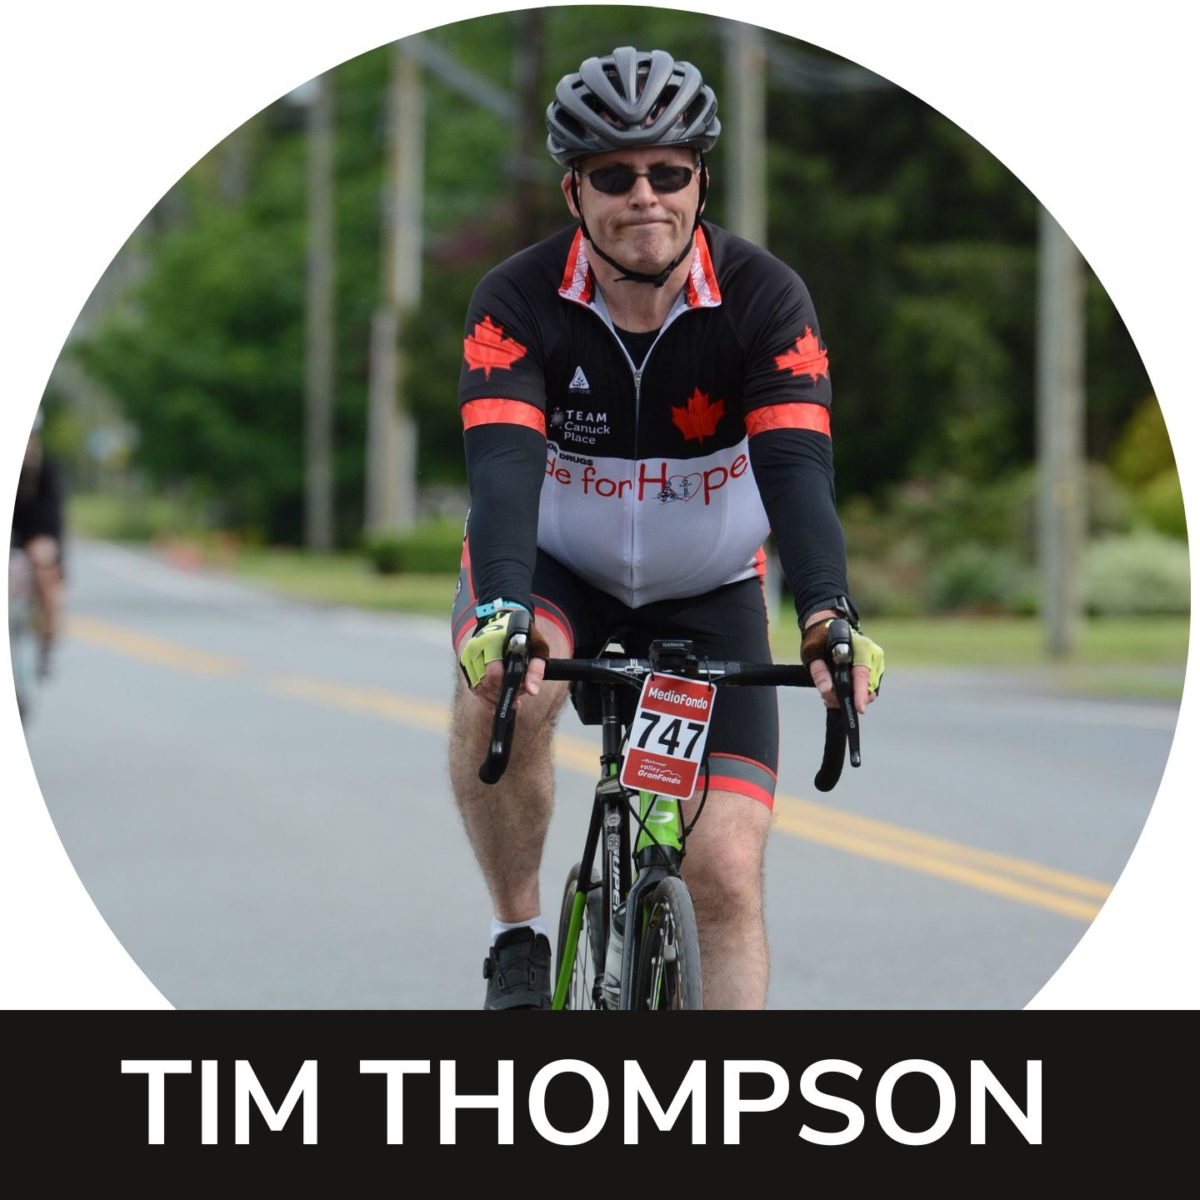 Tim Thompson